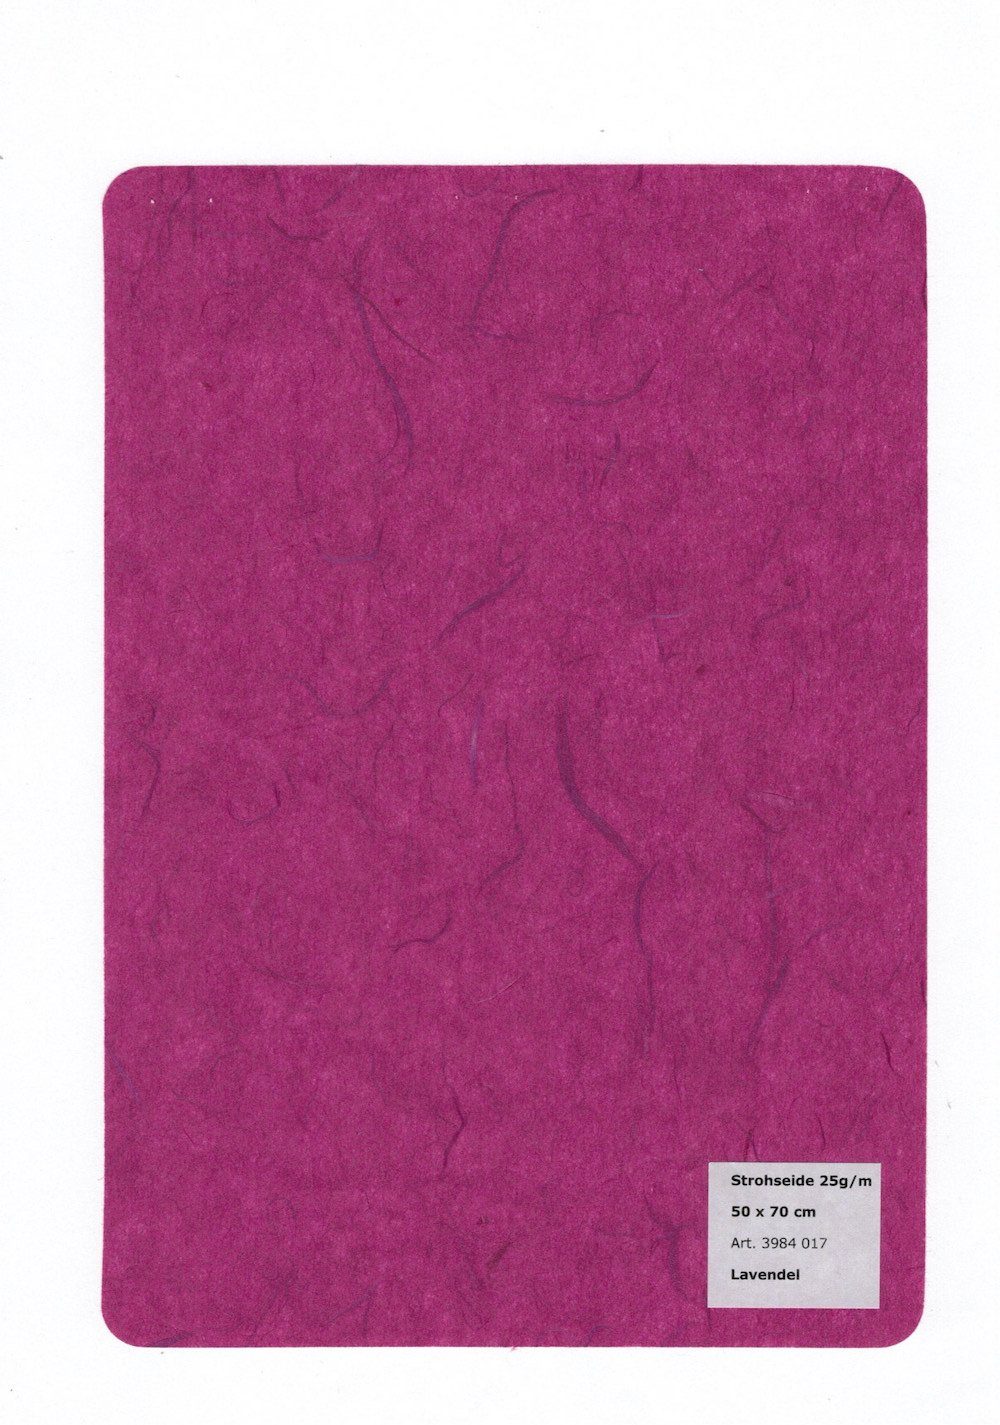 HobbyFun Zeichenpapier STYLO Strohseide 25 g/m² 50x70cm, 1 Bogen Lavendel